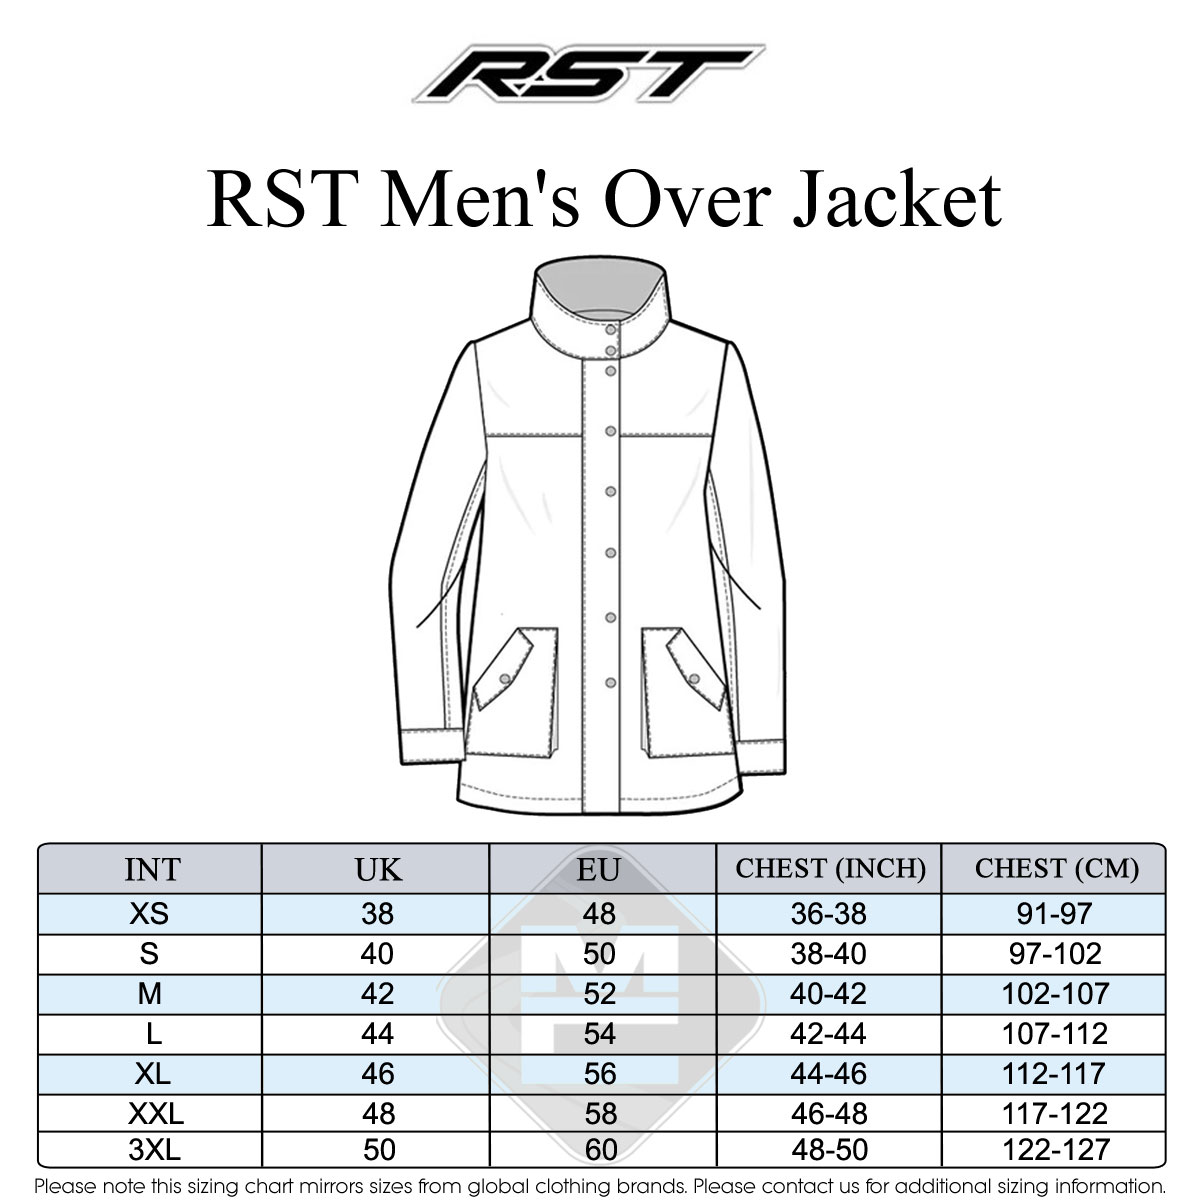 RST Men's Size Guide